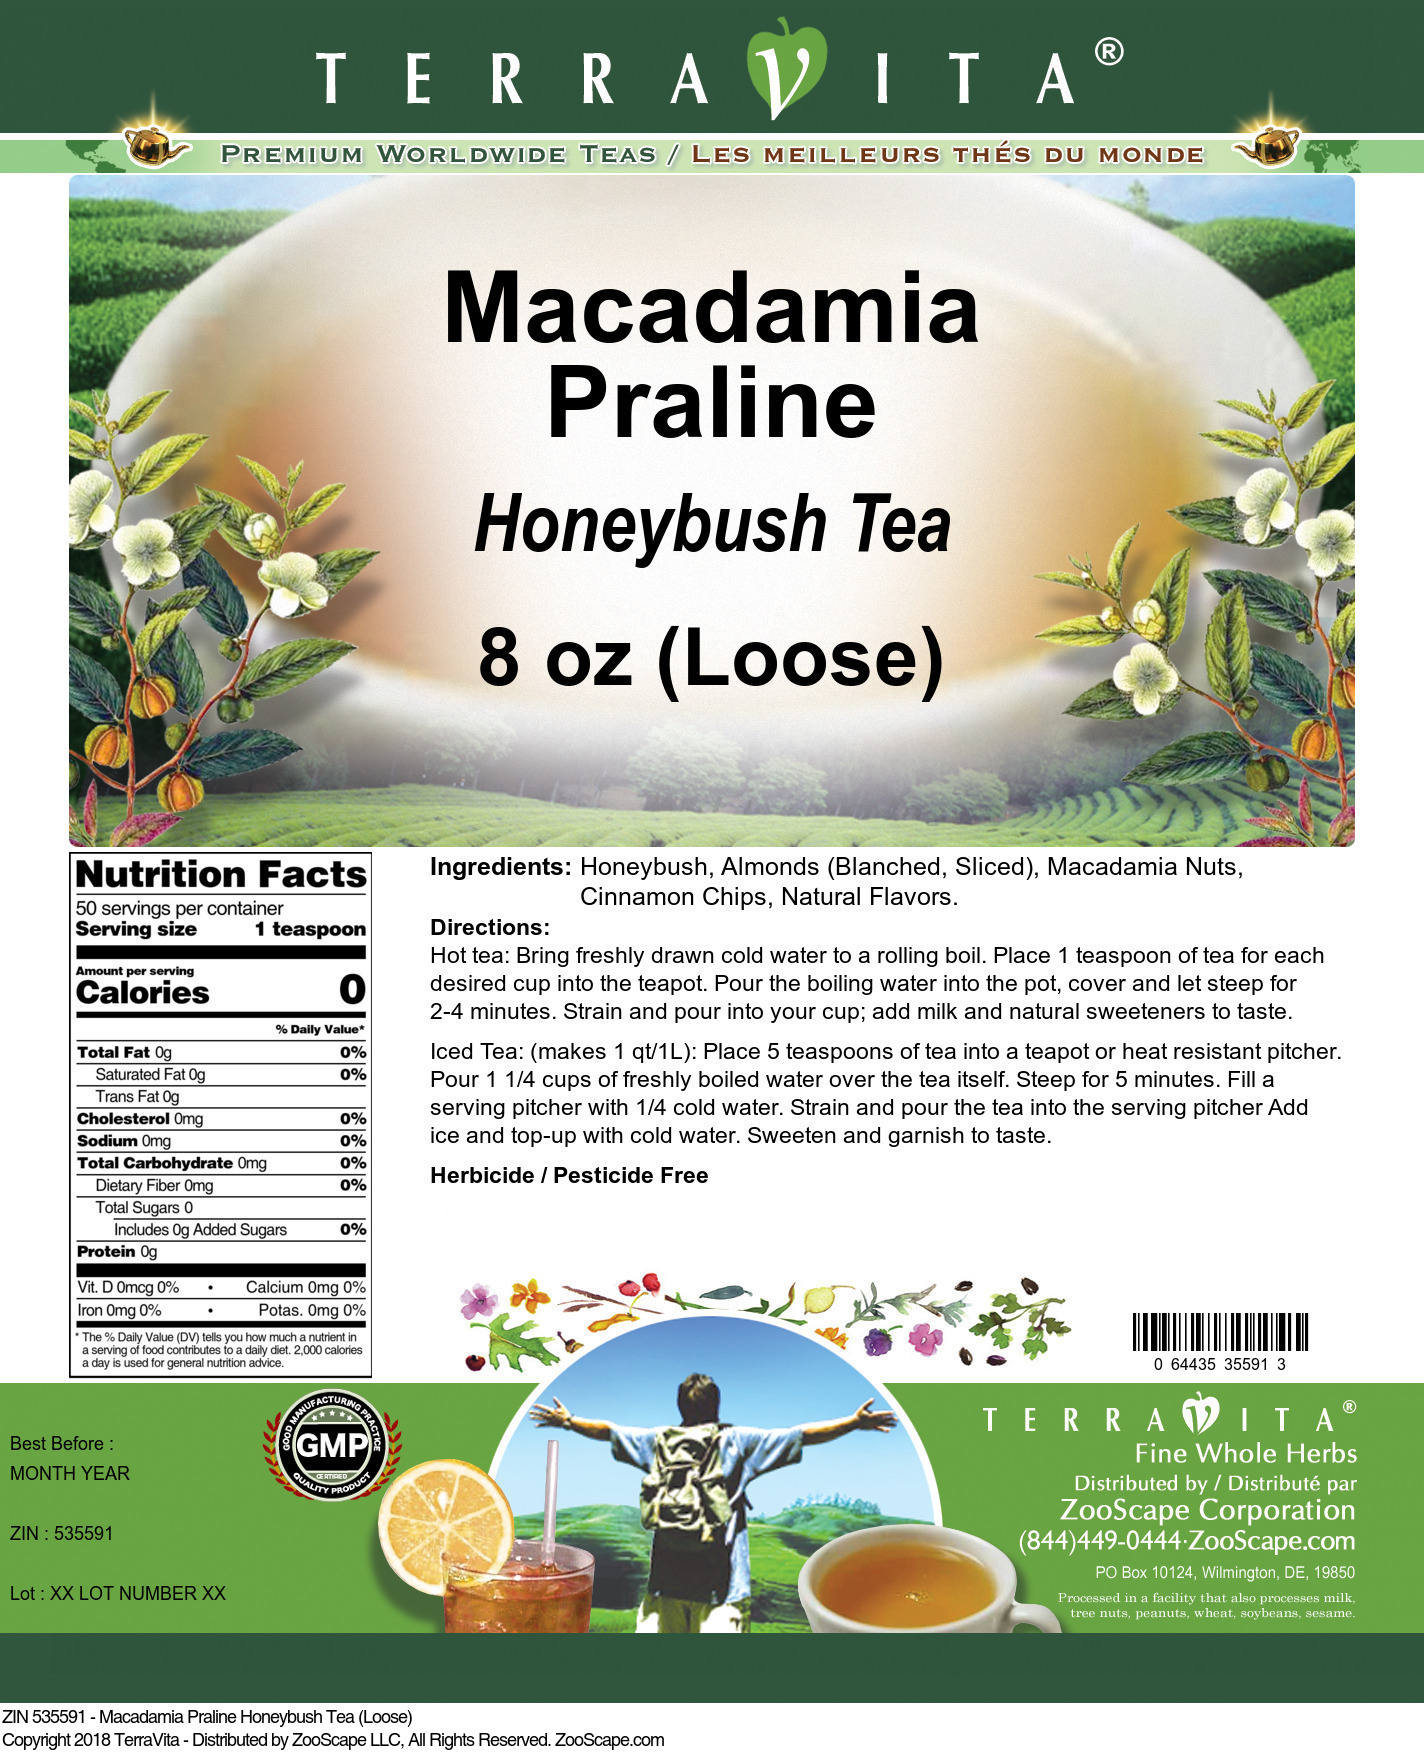 Macadamia Praline Honeybush Tea (Loose) - Label